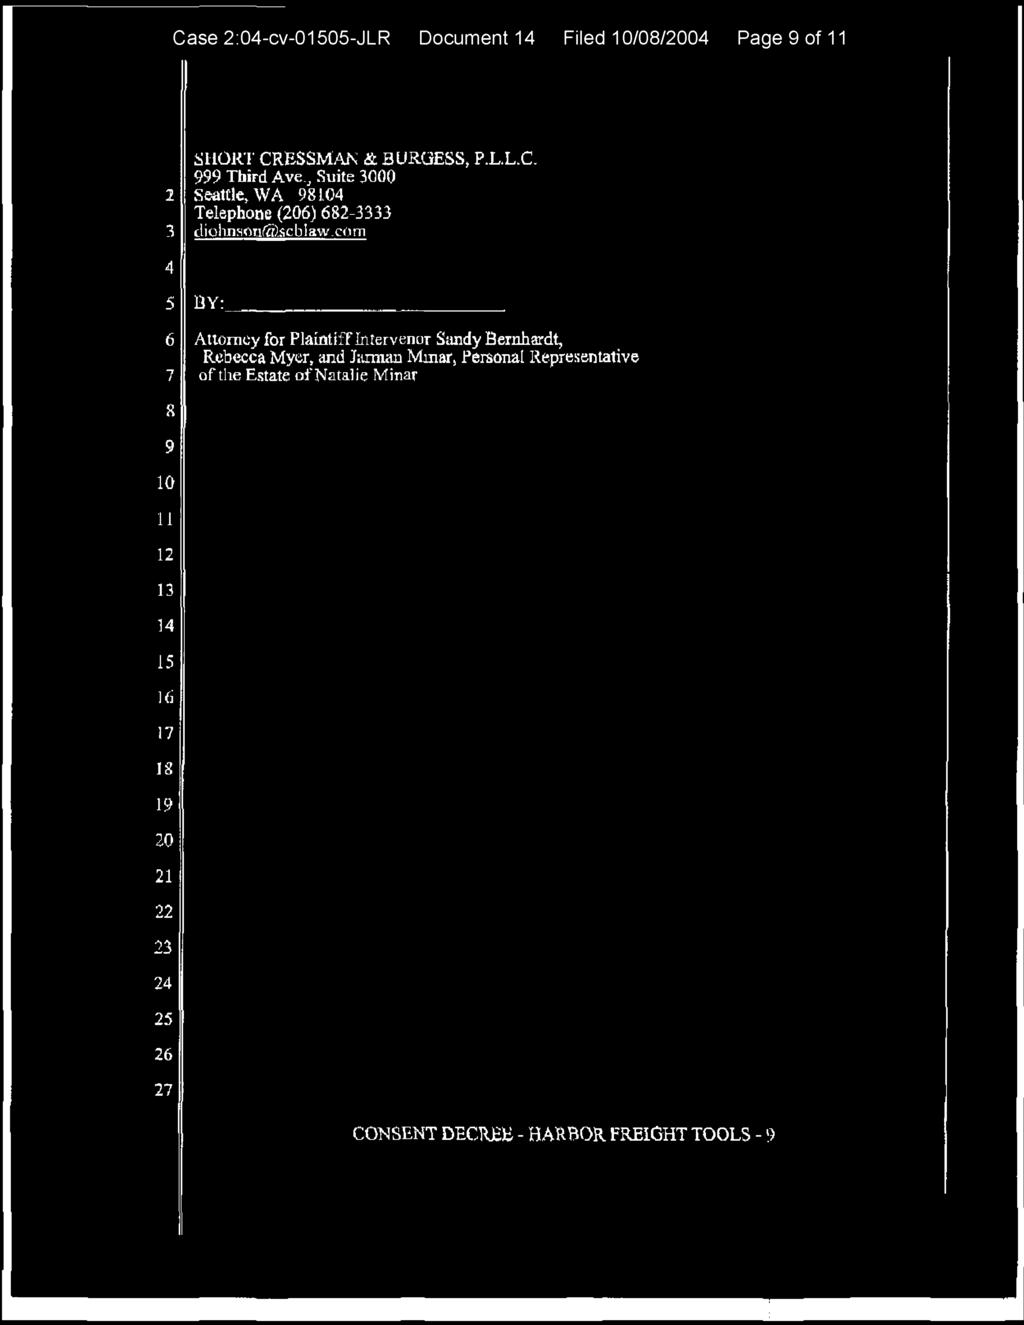 Case 2:0-cv-00-JLR Document Filed /0/0 Page of 2 SHORT CRESSMAN & BURGESS, P.LX.C. Third Ave., Suite 000 Seattle, WA Telephone () 2- dioimsoti@iicblaw.